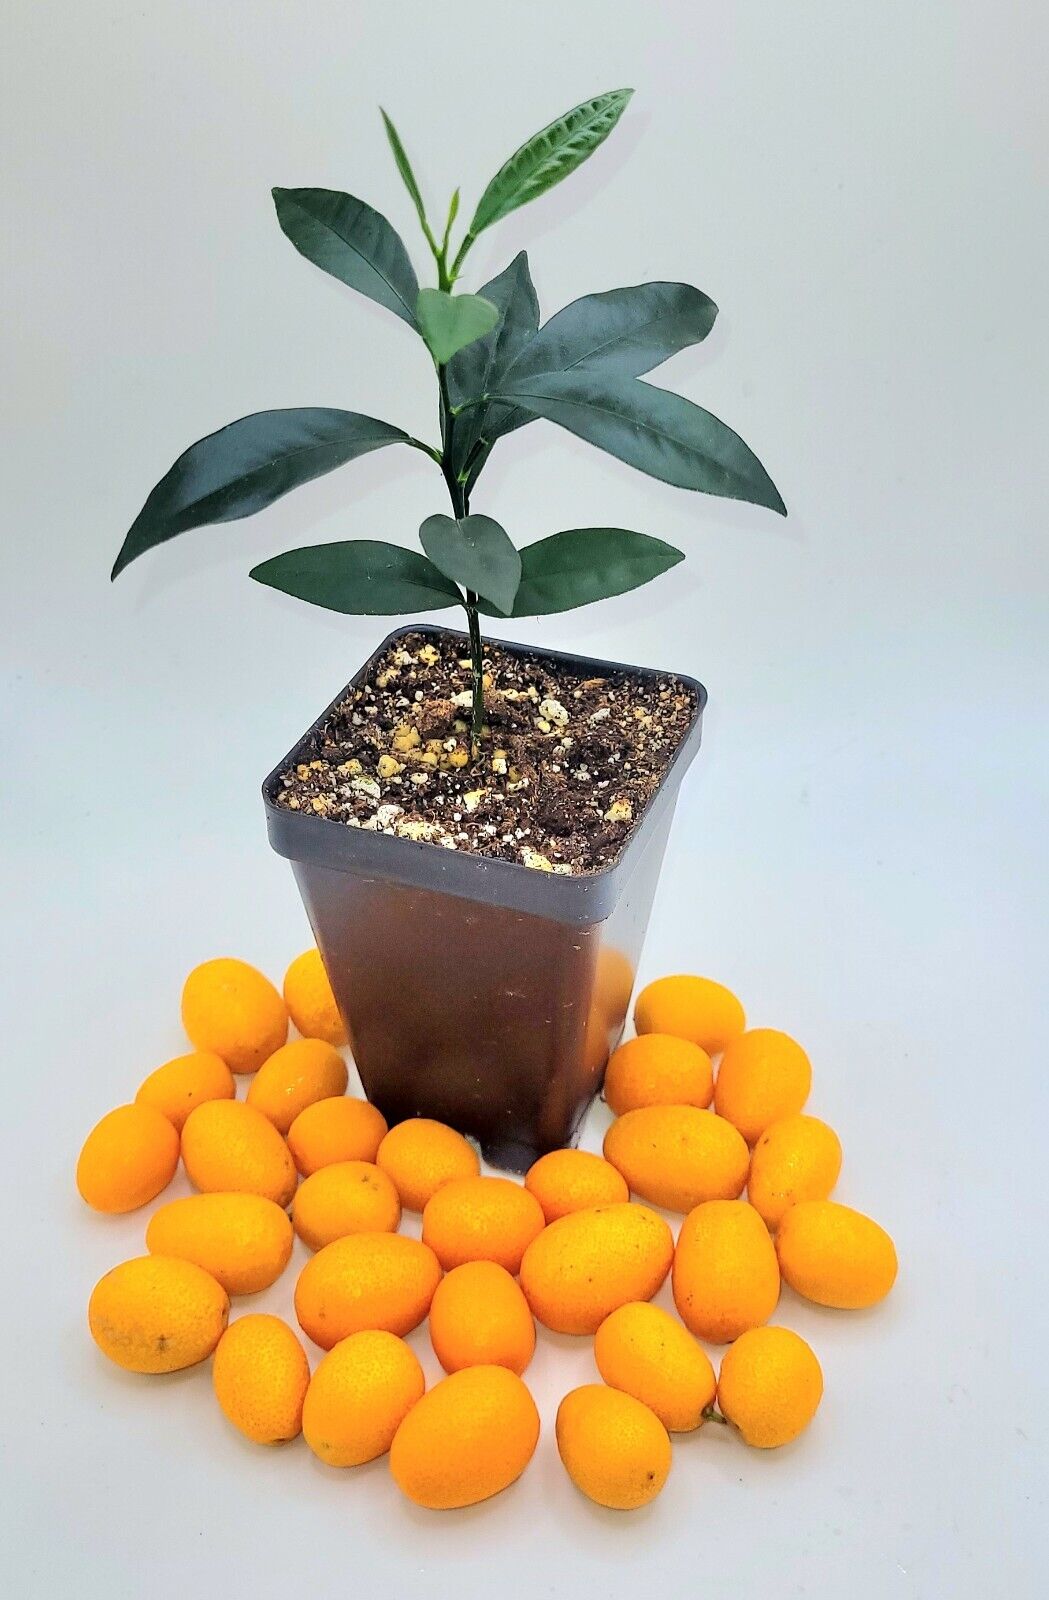 Nagami Kumquat seedling, 3-5 inches tall